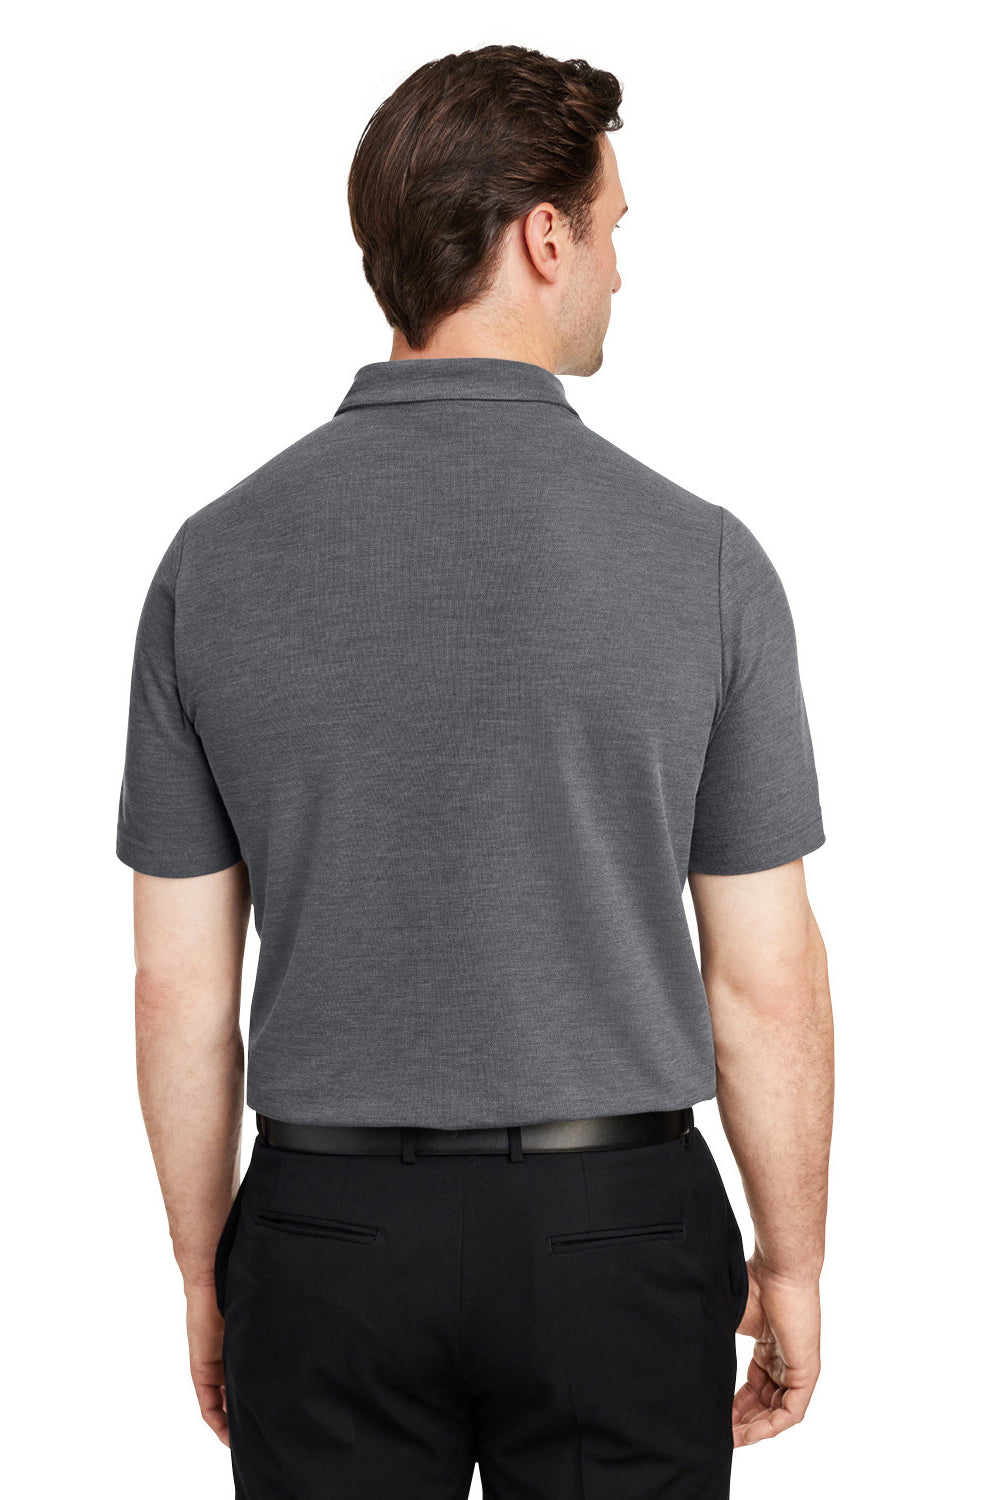 Core 365 CE112 Mens Fusion ChromaSoft Performance Moisture Wicking Short Sleeve Polo Shirt Heather Carbon Grey Back